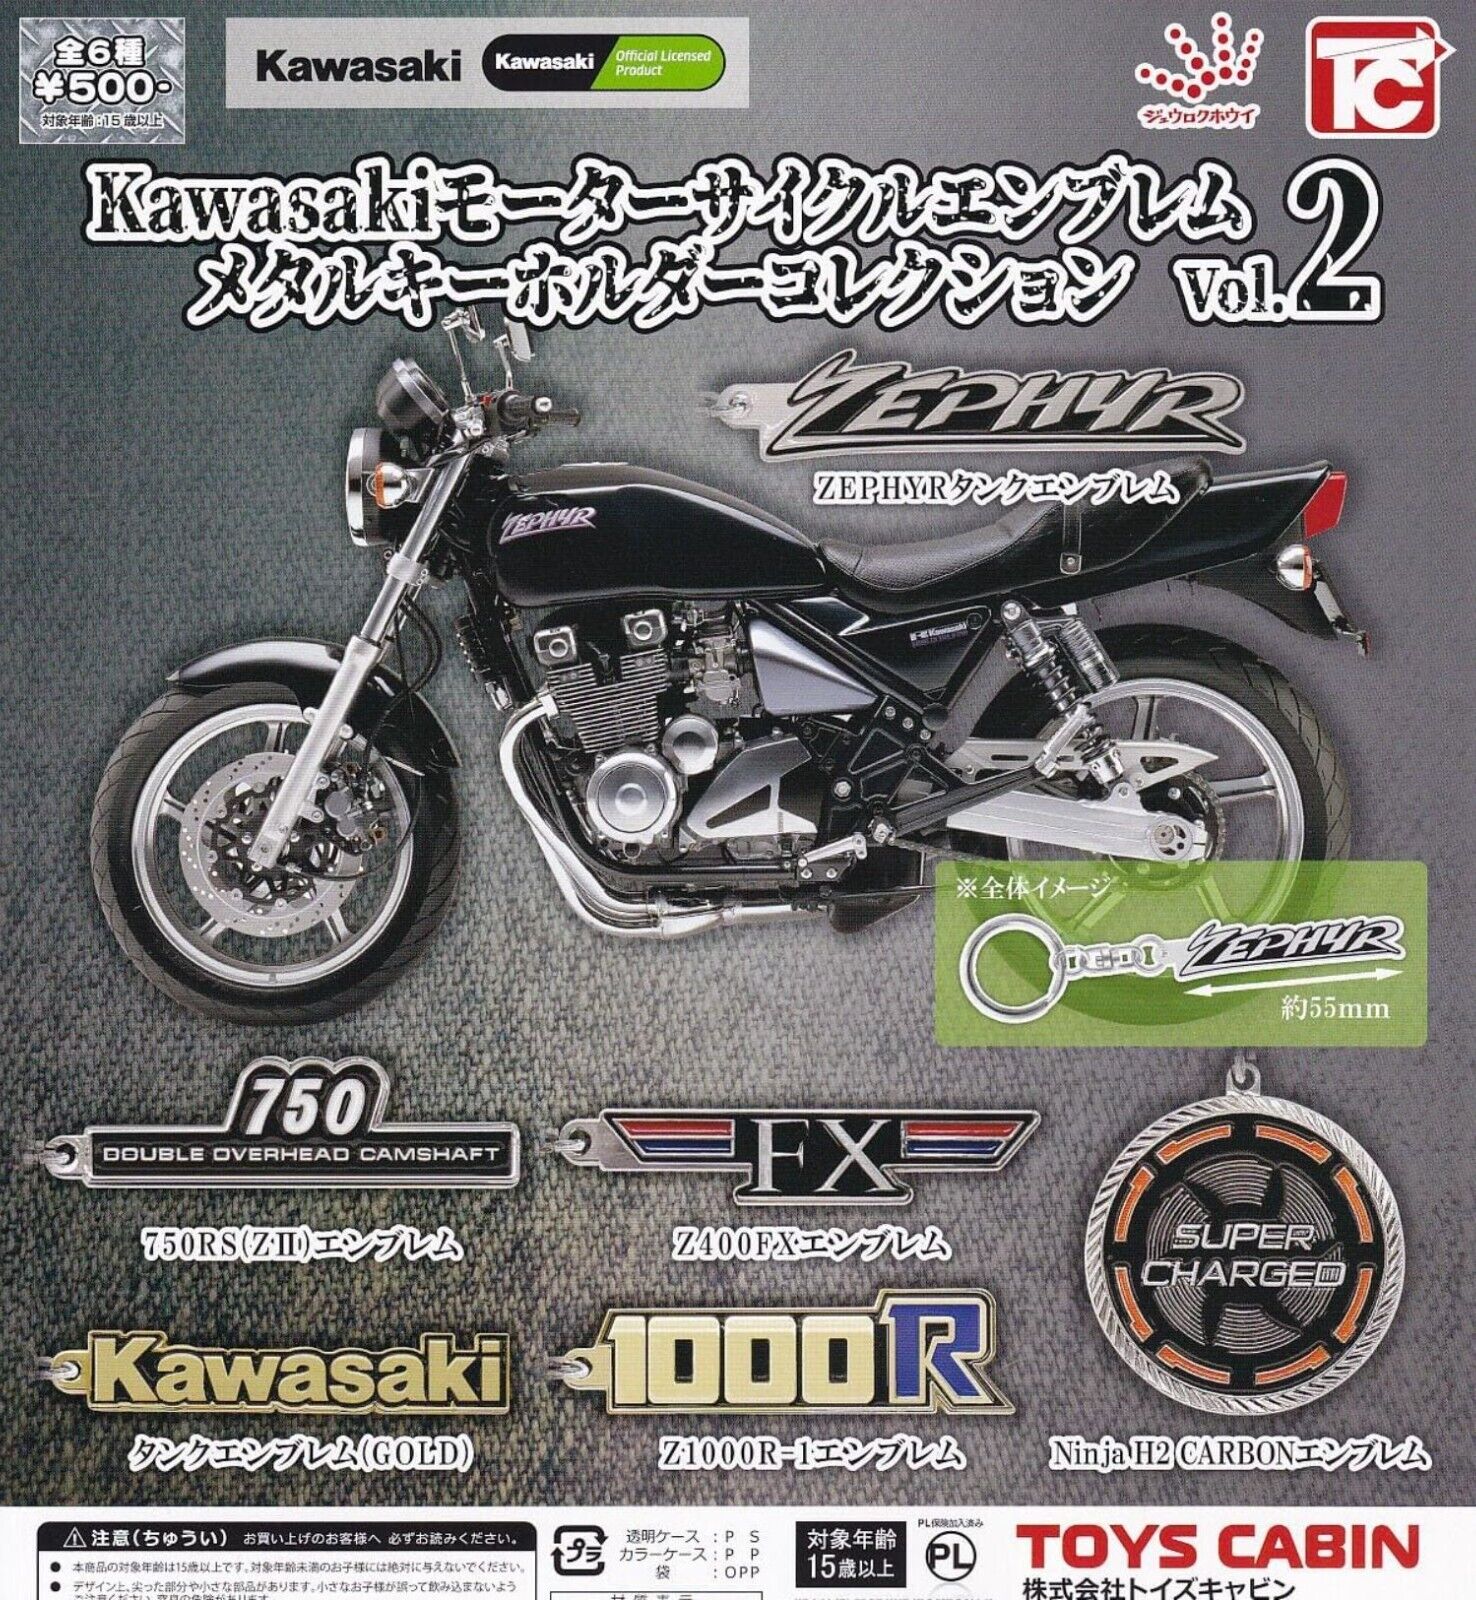 Kawasaki Motorcycle Emblem Metal Key Chain 2 Capsule Toy 6 Types Comp Set Gacha